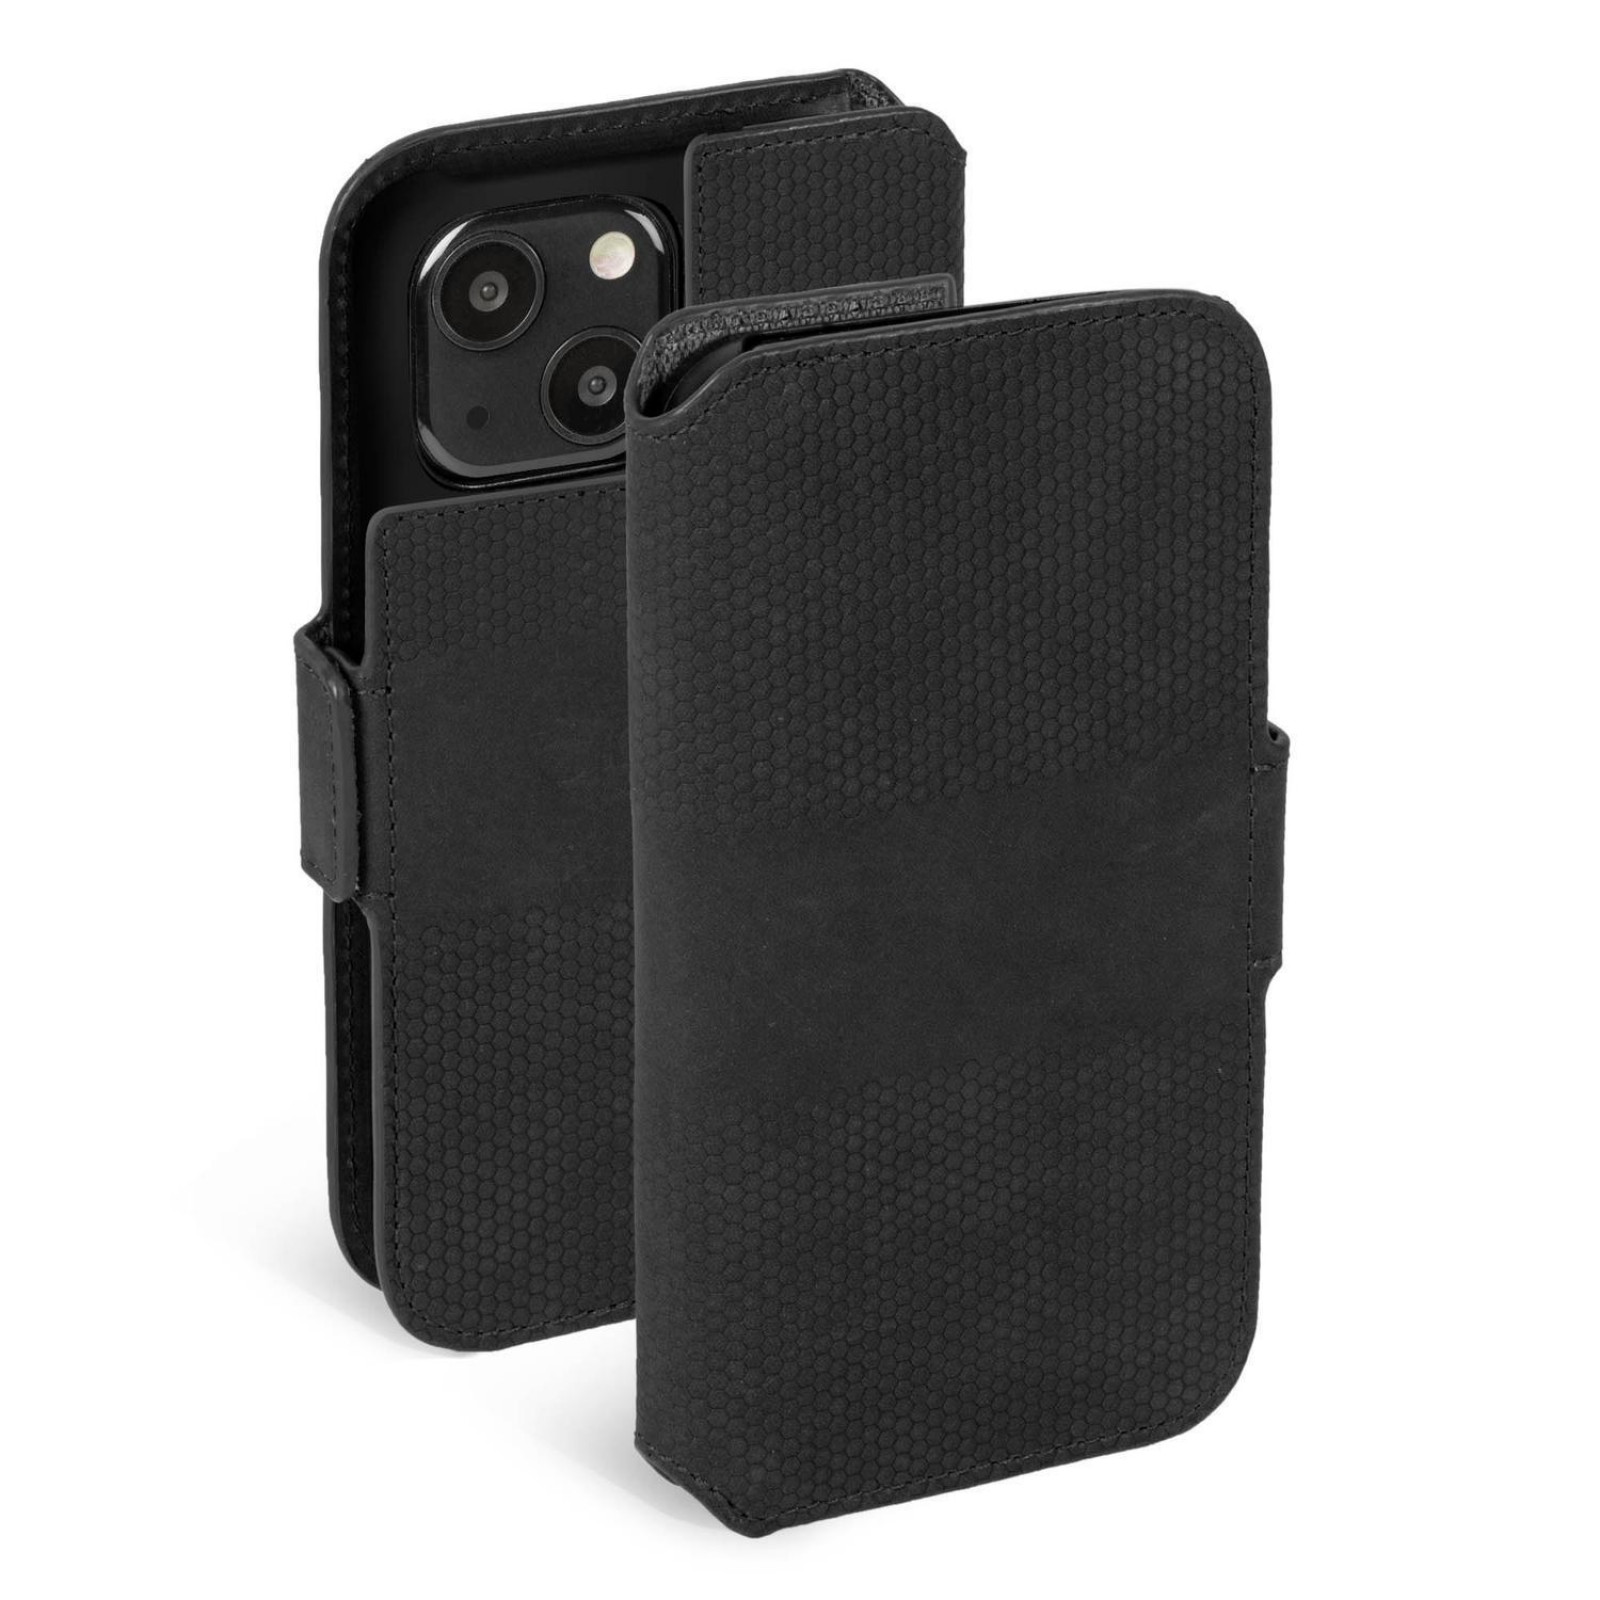 Калъф Krusell Leather Wallet за Iphone 13 mini - Черен